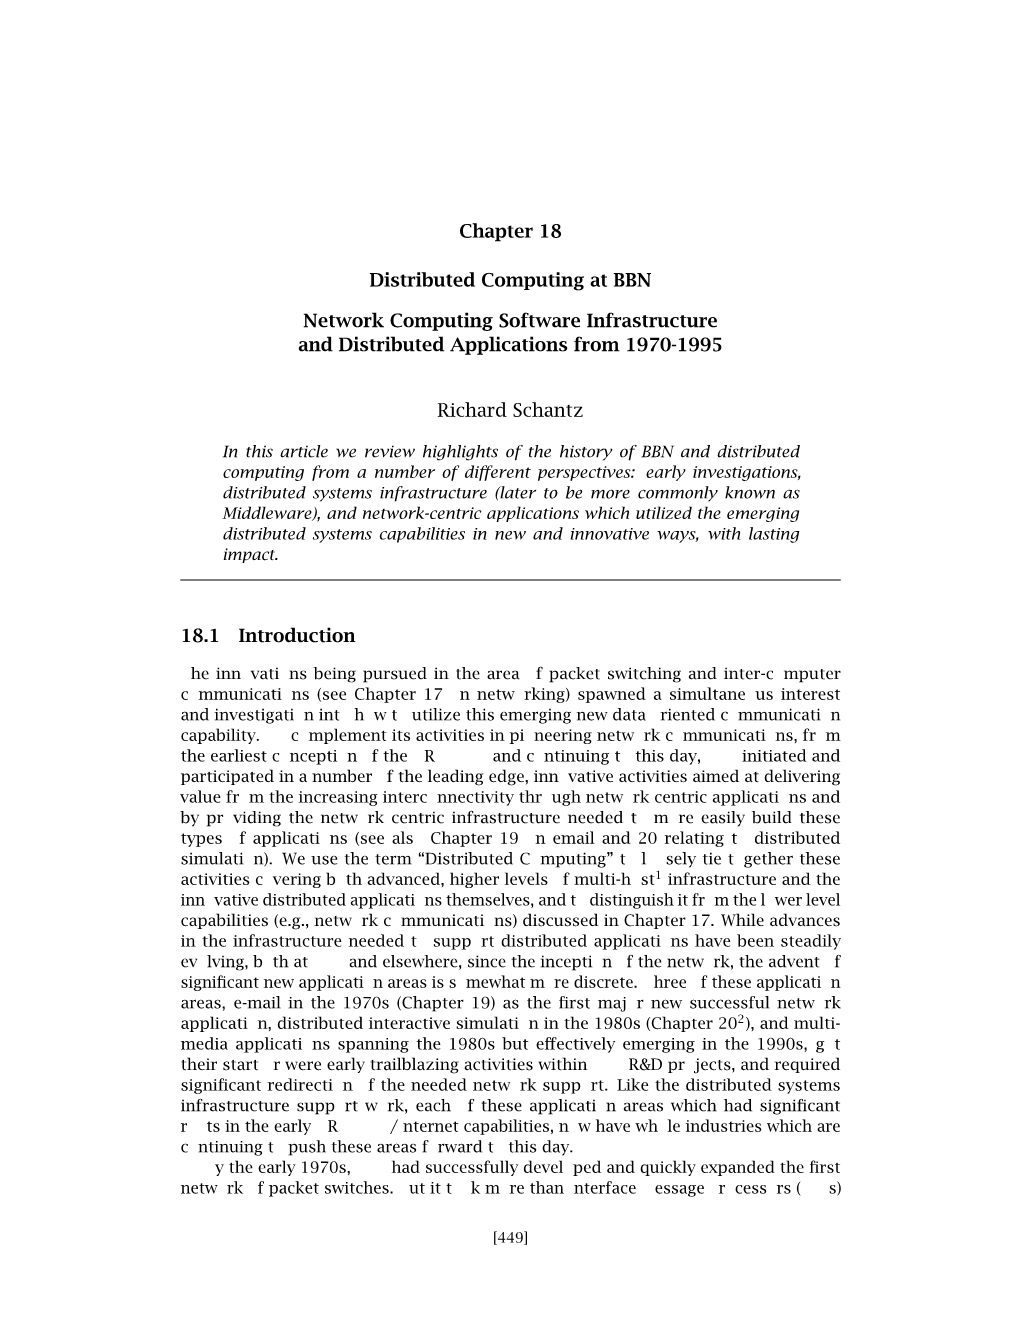 Chapter 18 Distributed Computing at BBN Network Computing Software